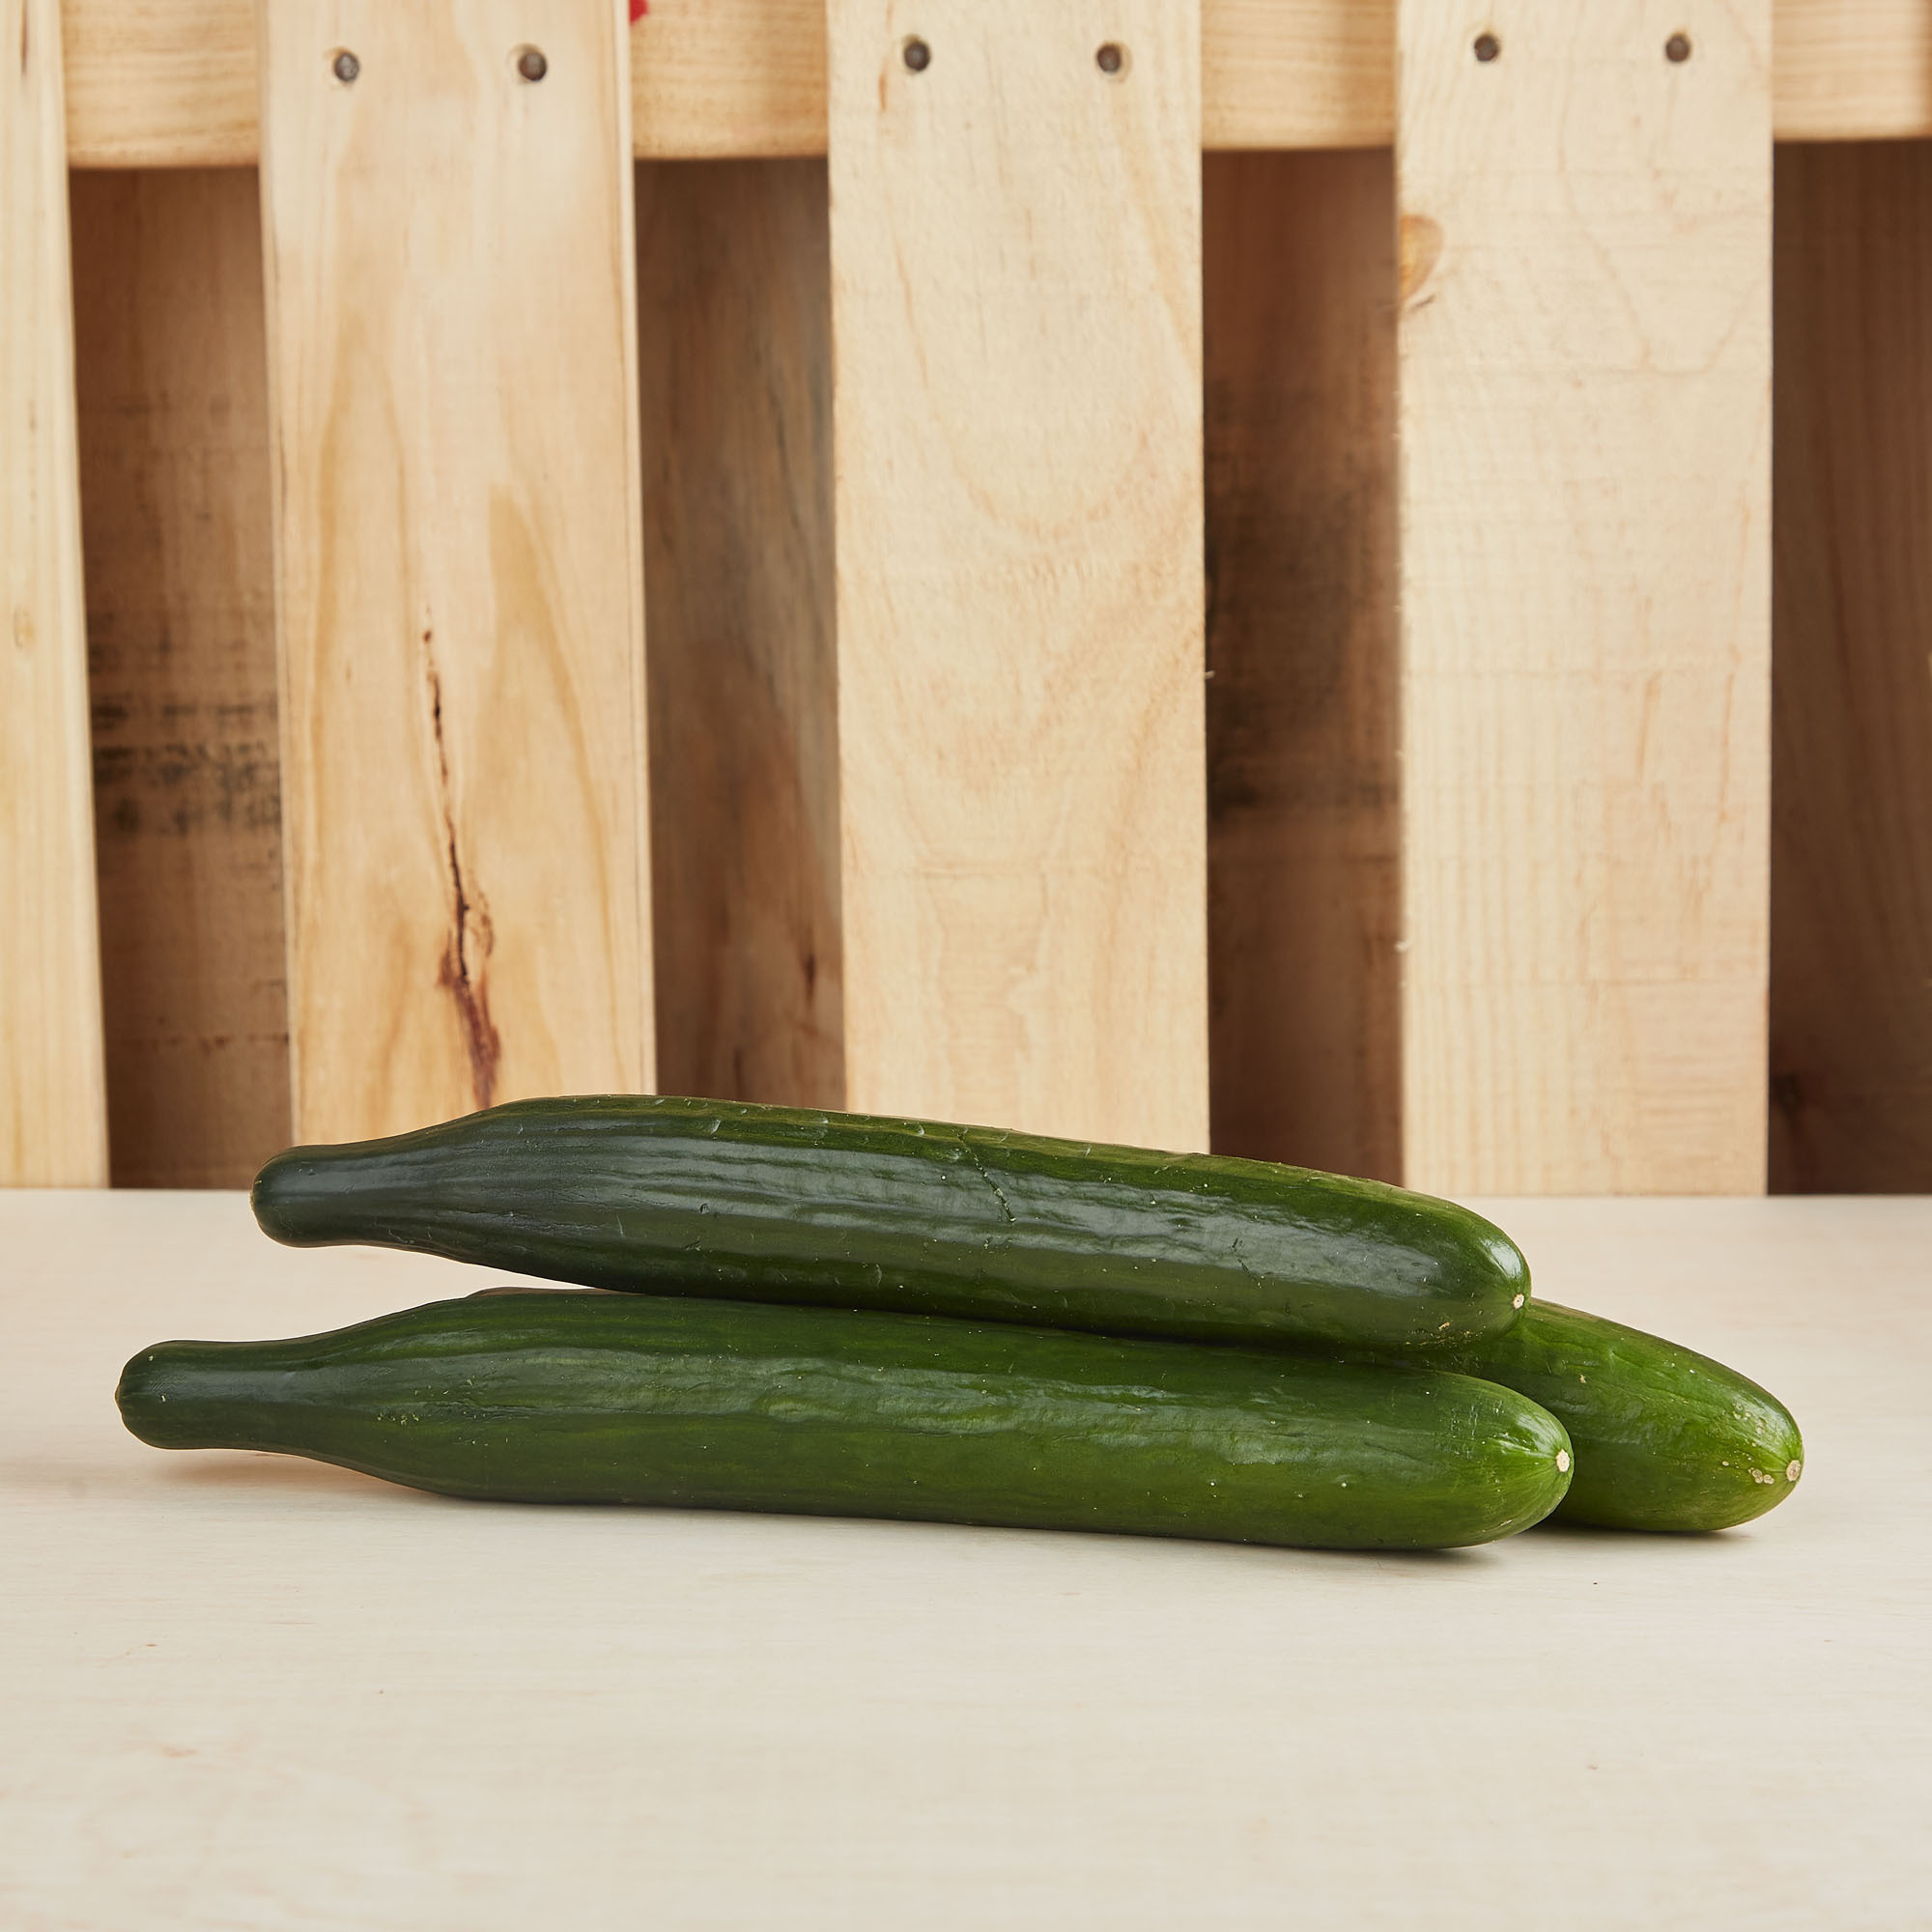 Fresh Organic Cucumbers, 2 Count